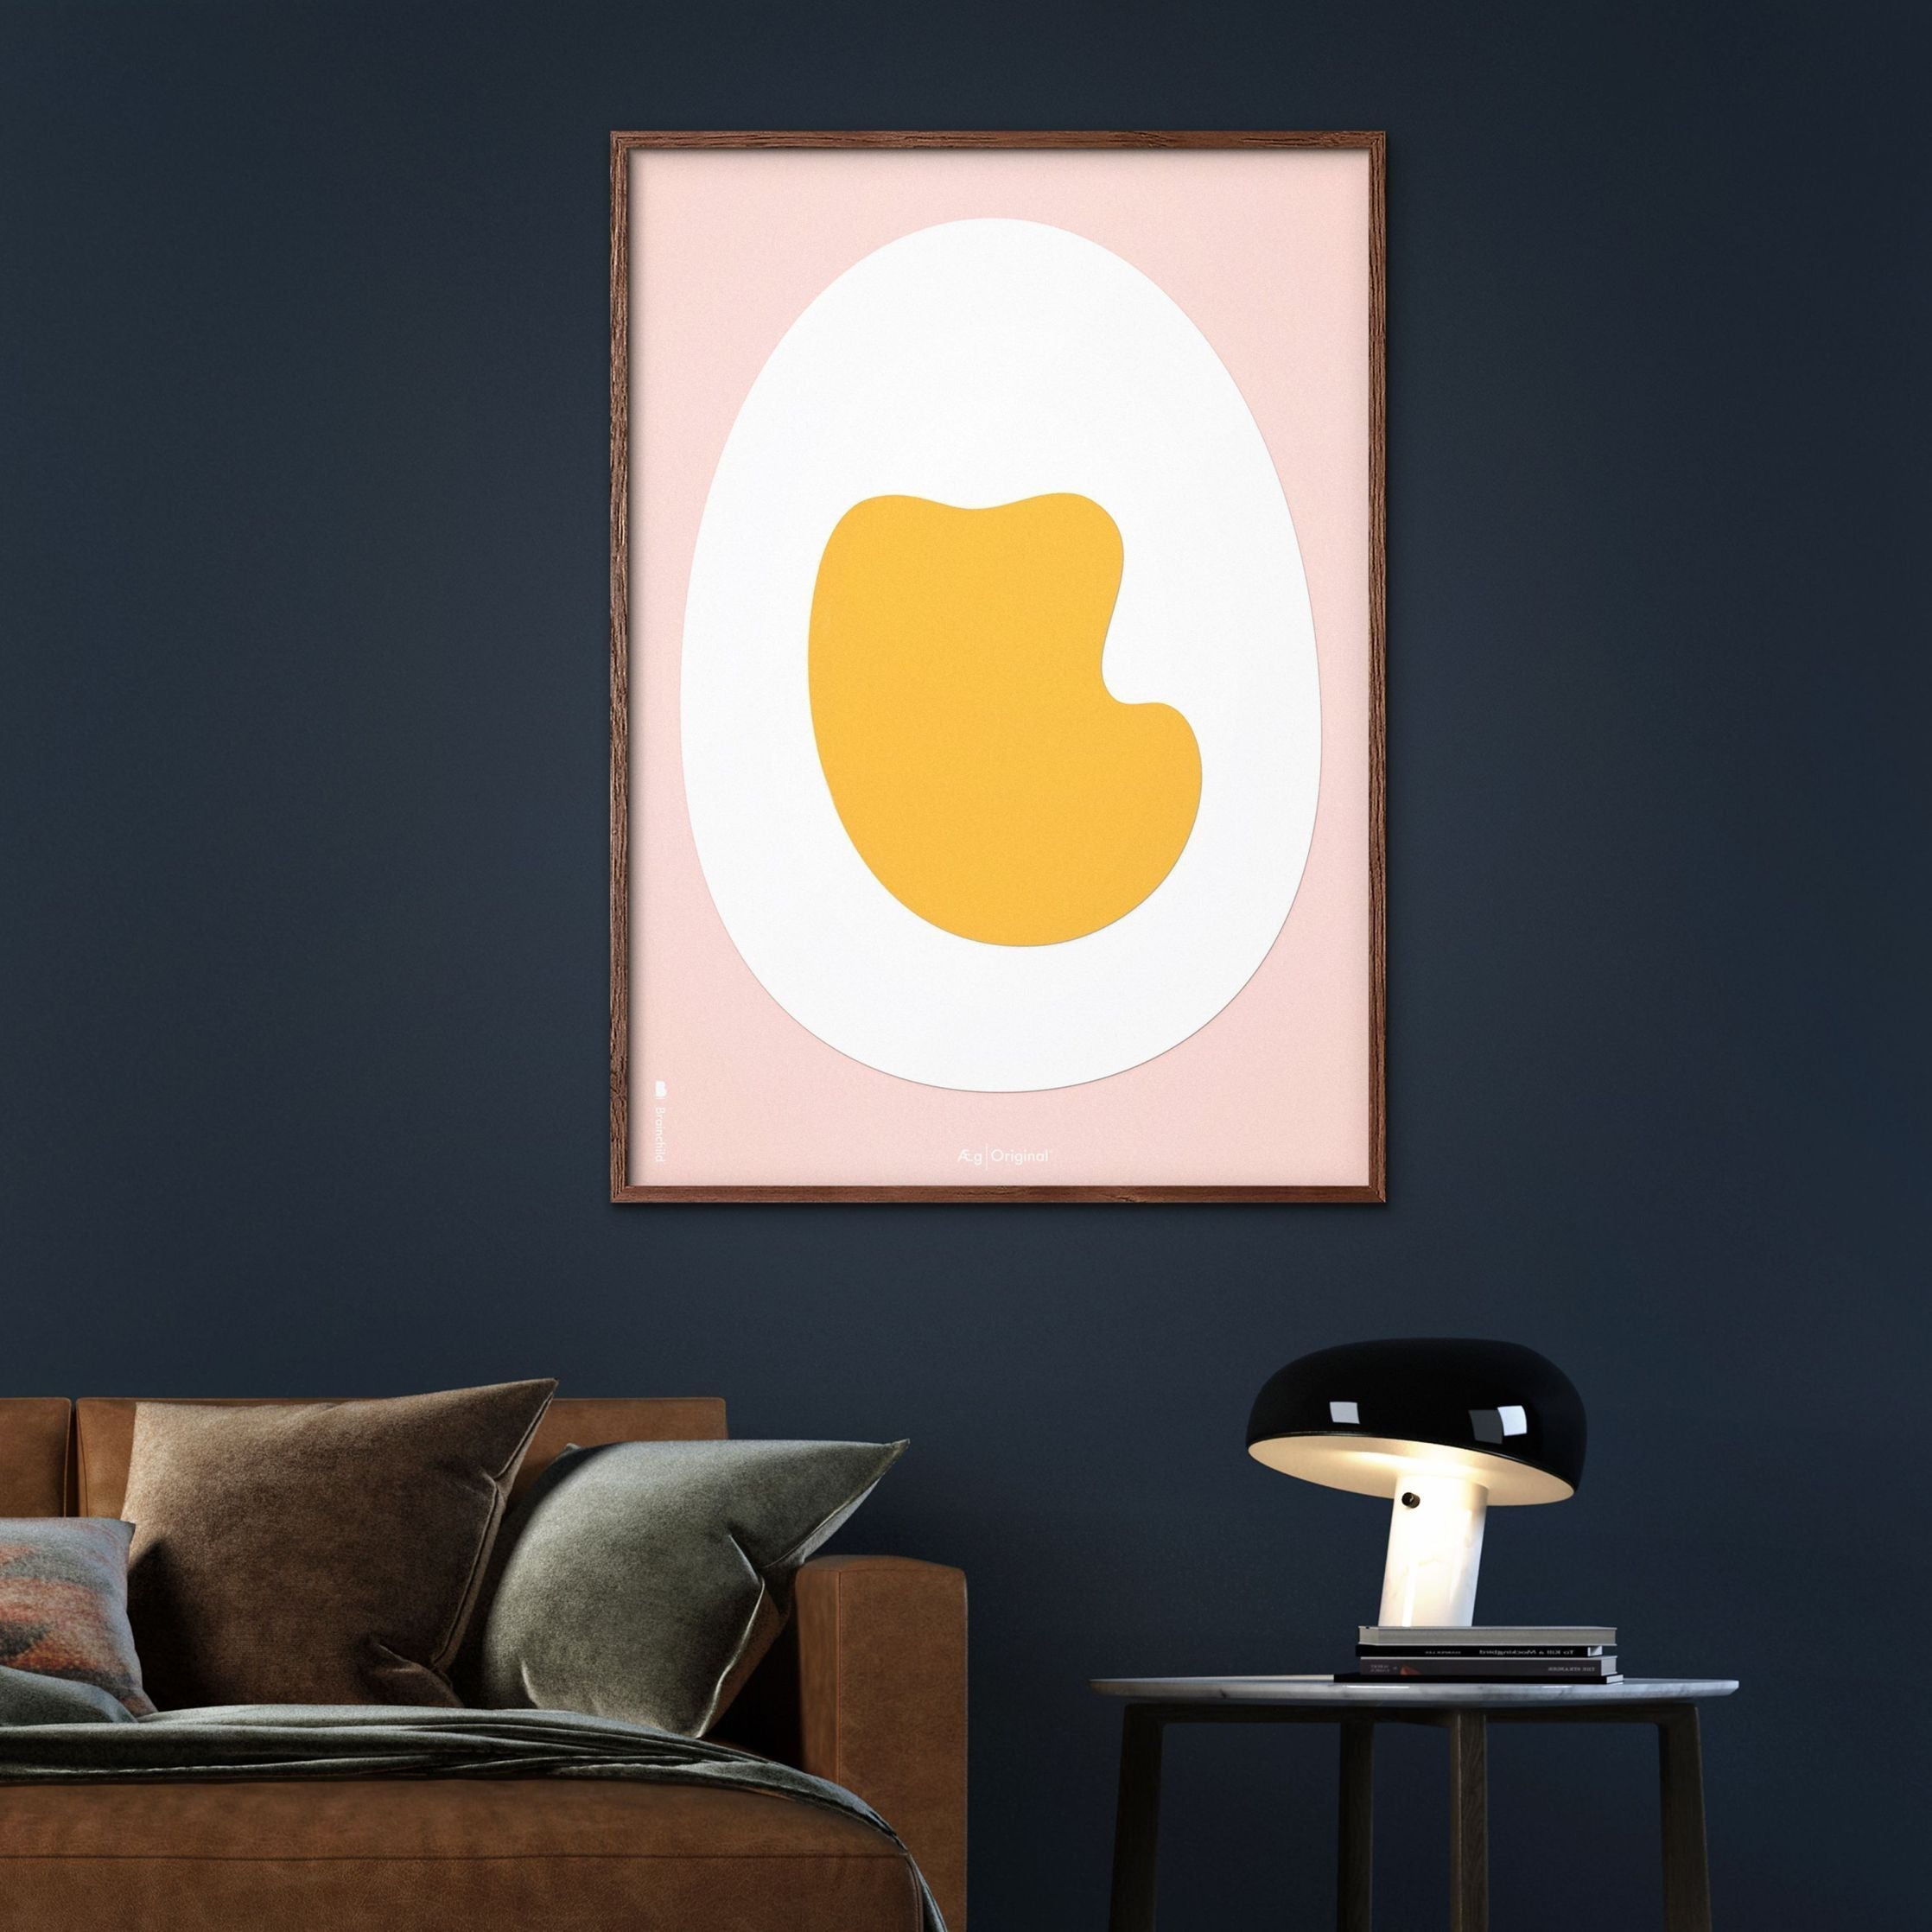 Póster de clip de papel de huevo de creación, marco de color de latón 70 x100 cm, fondo rosa